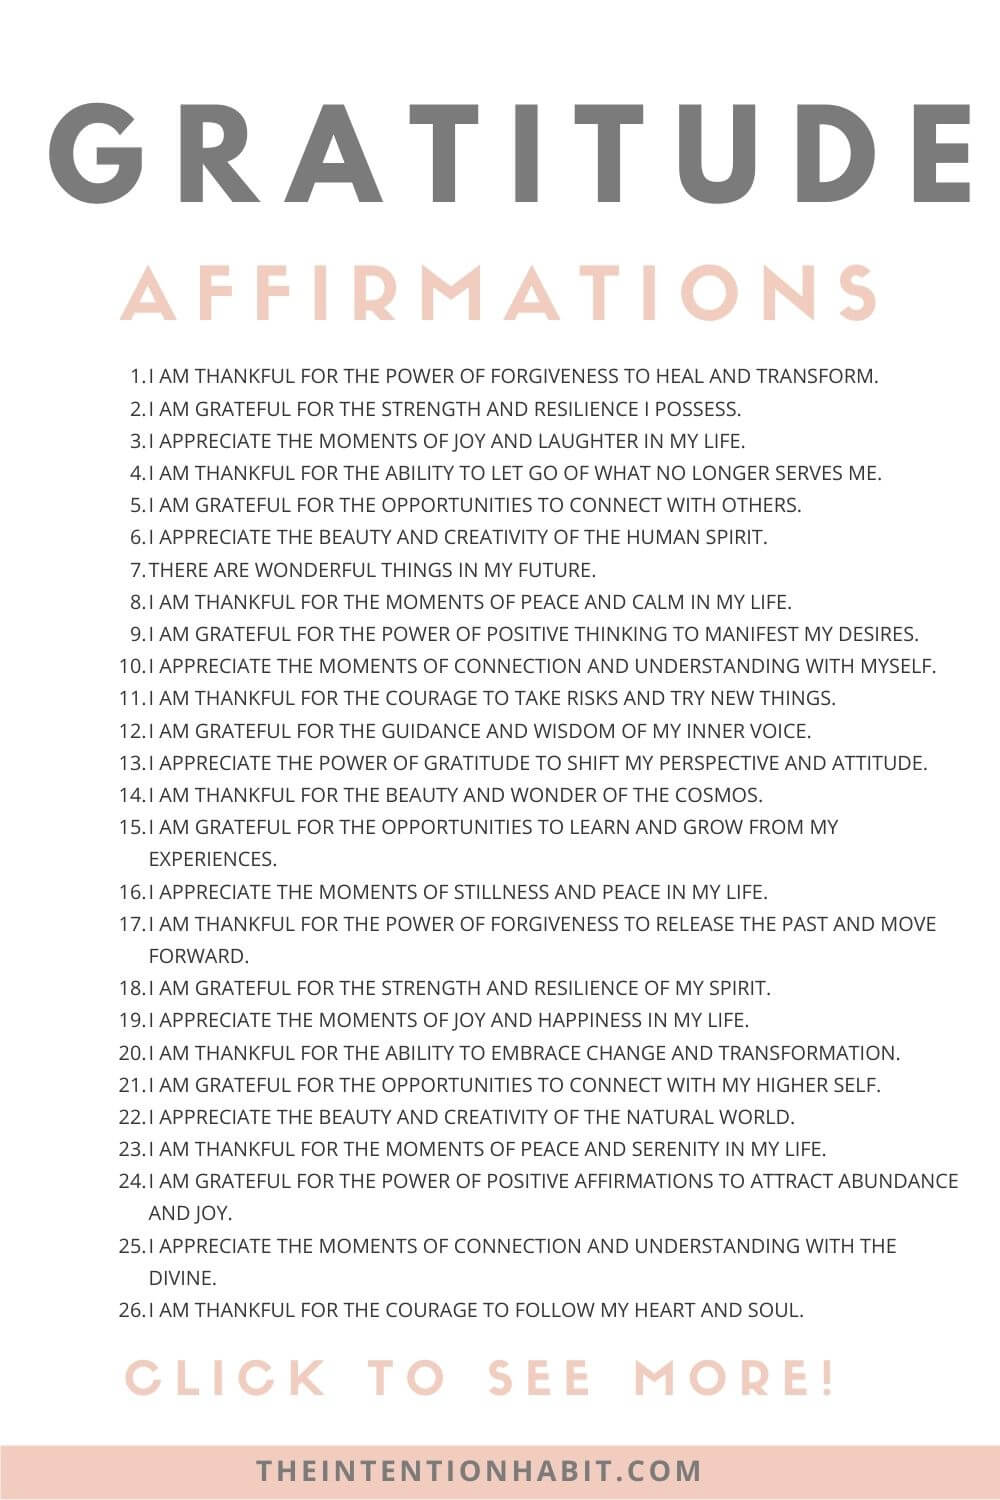 list of affirmations for gratitude.